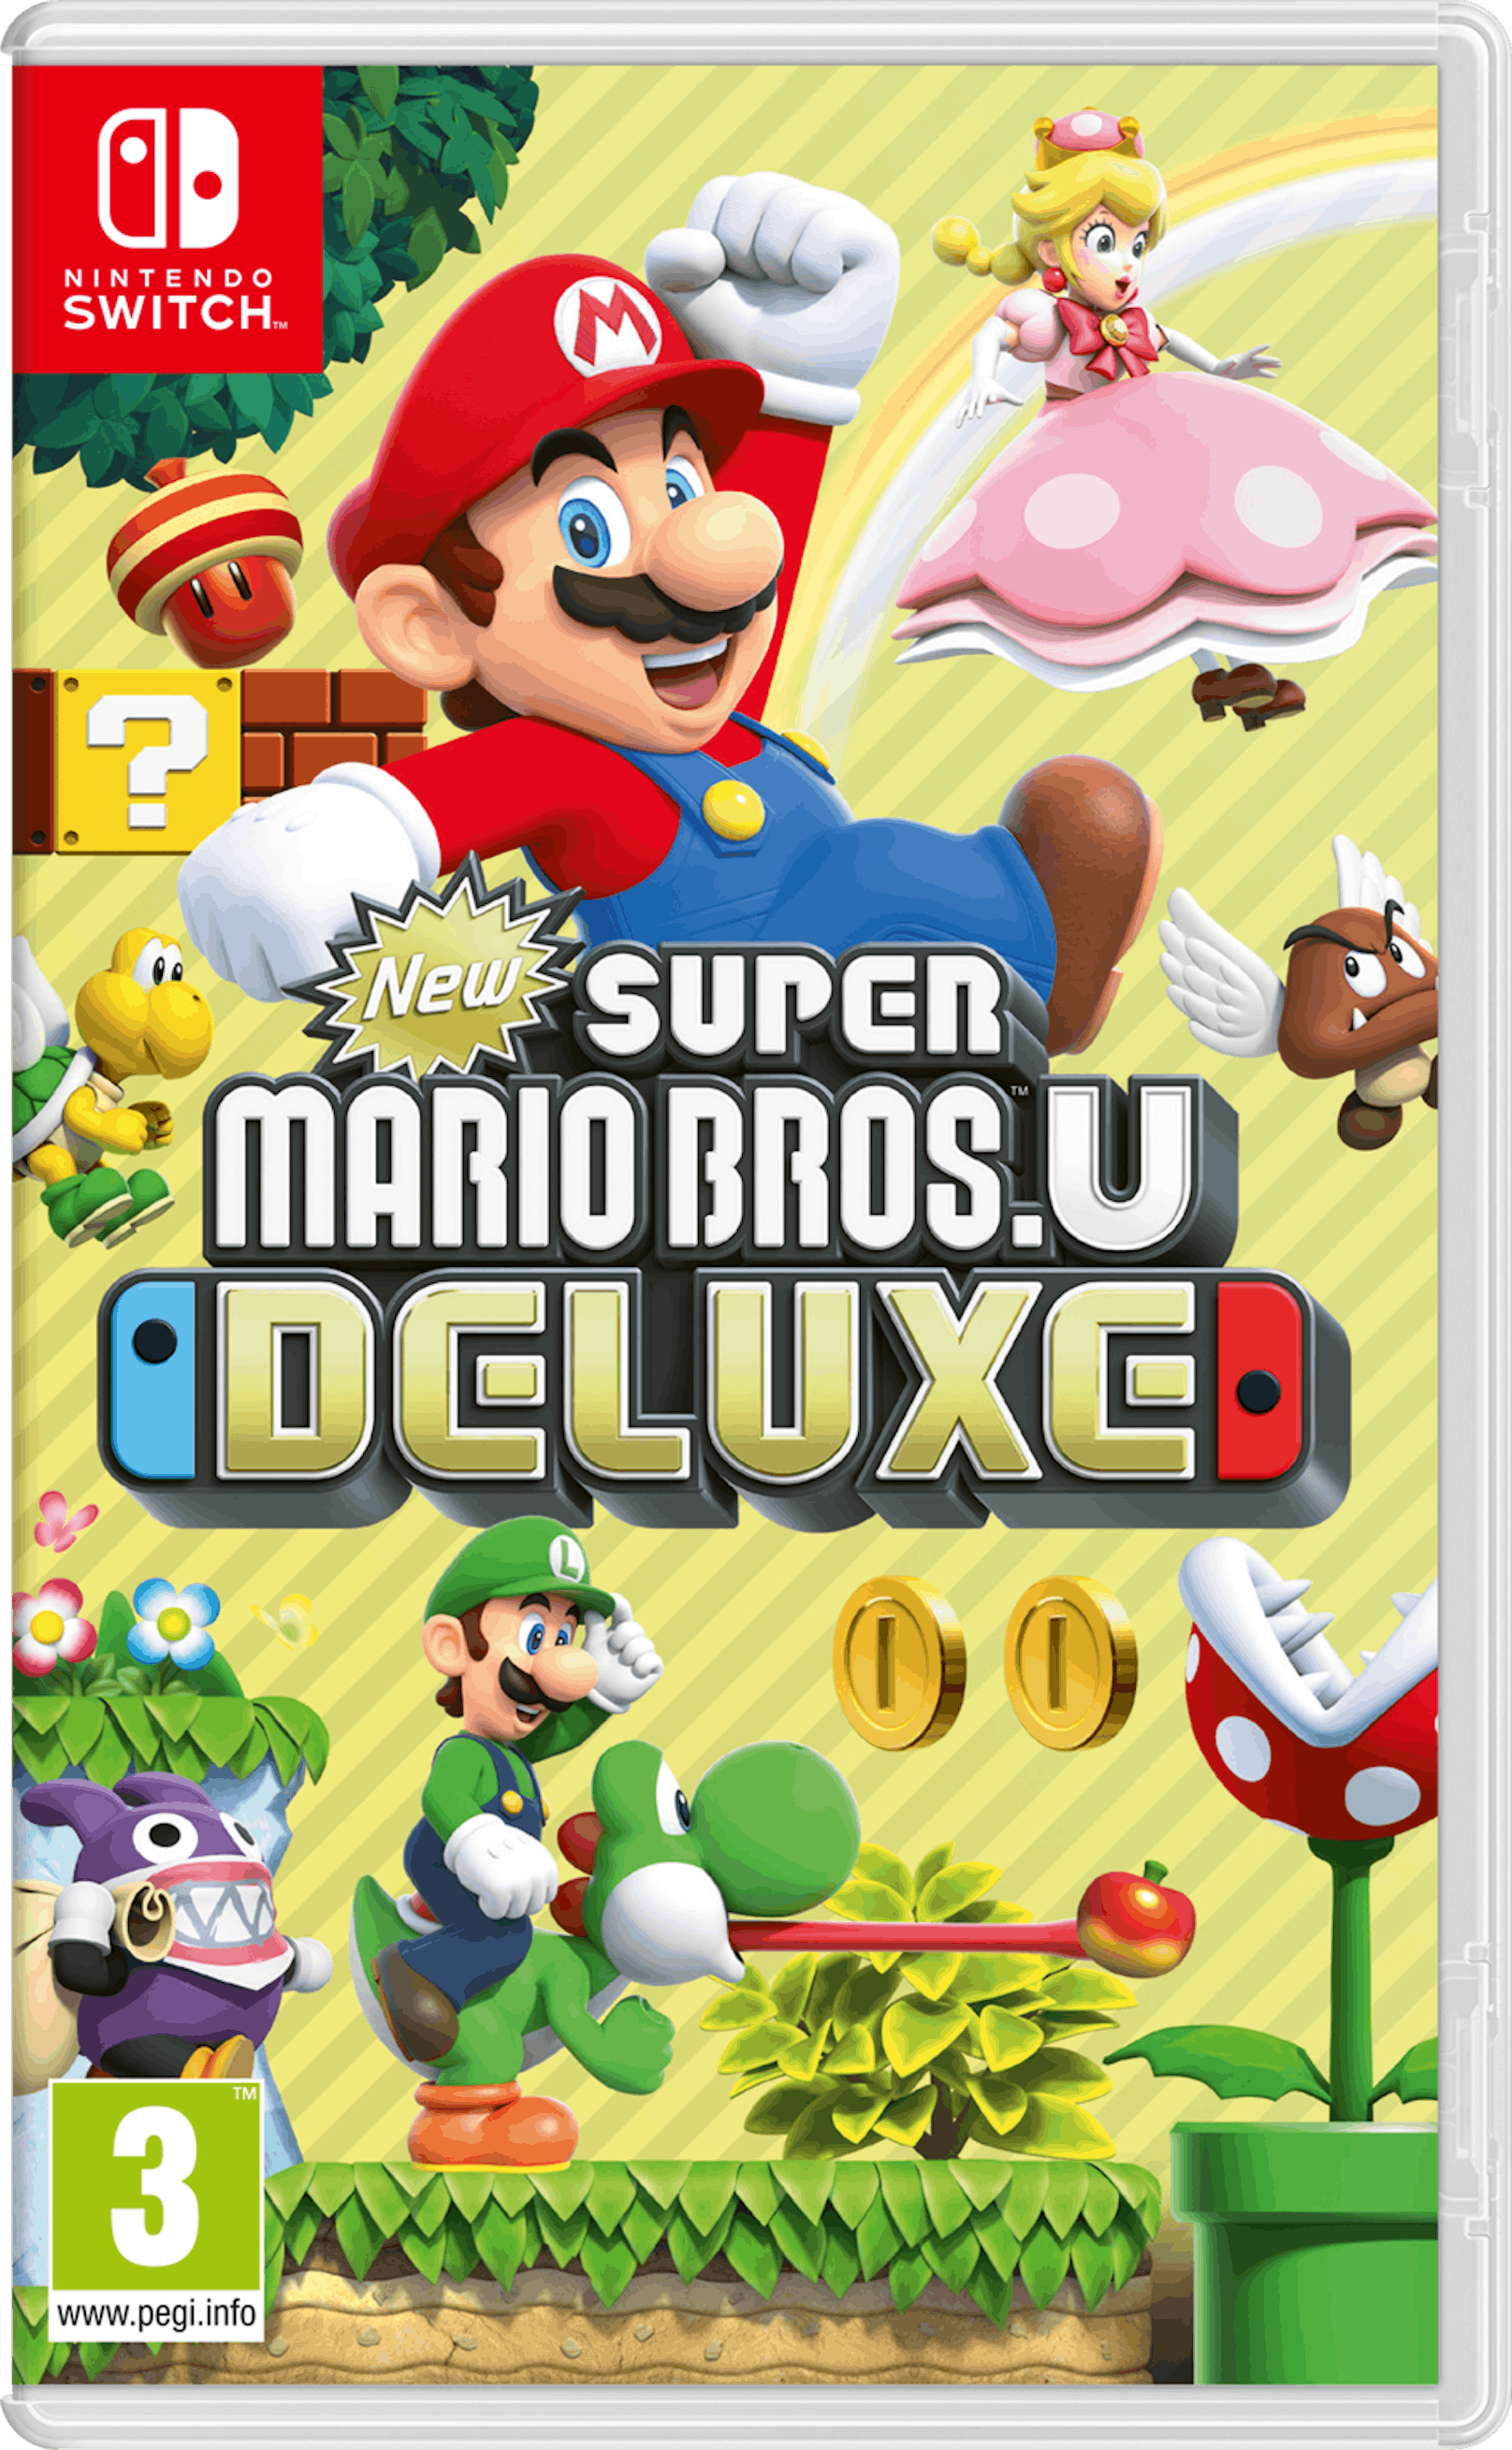 ... "New Super Mario Bros. U Deluxe" und ...